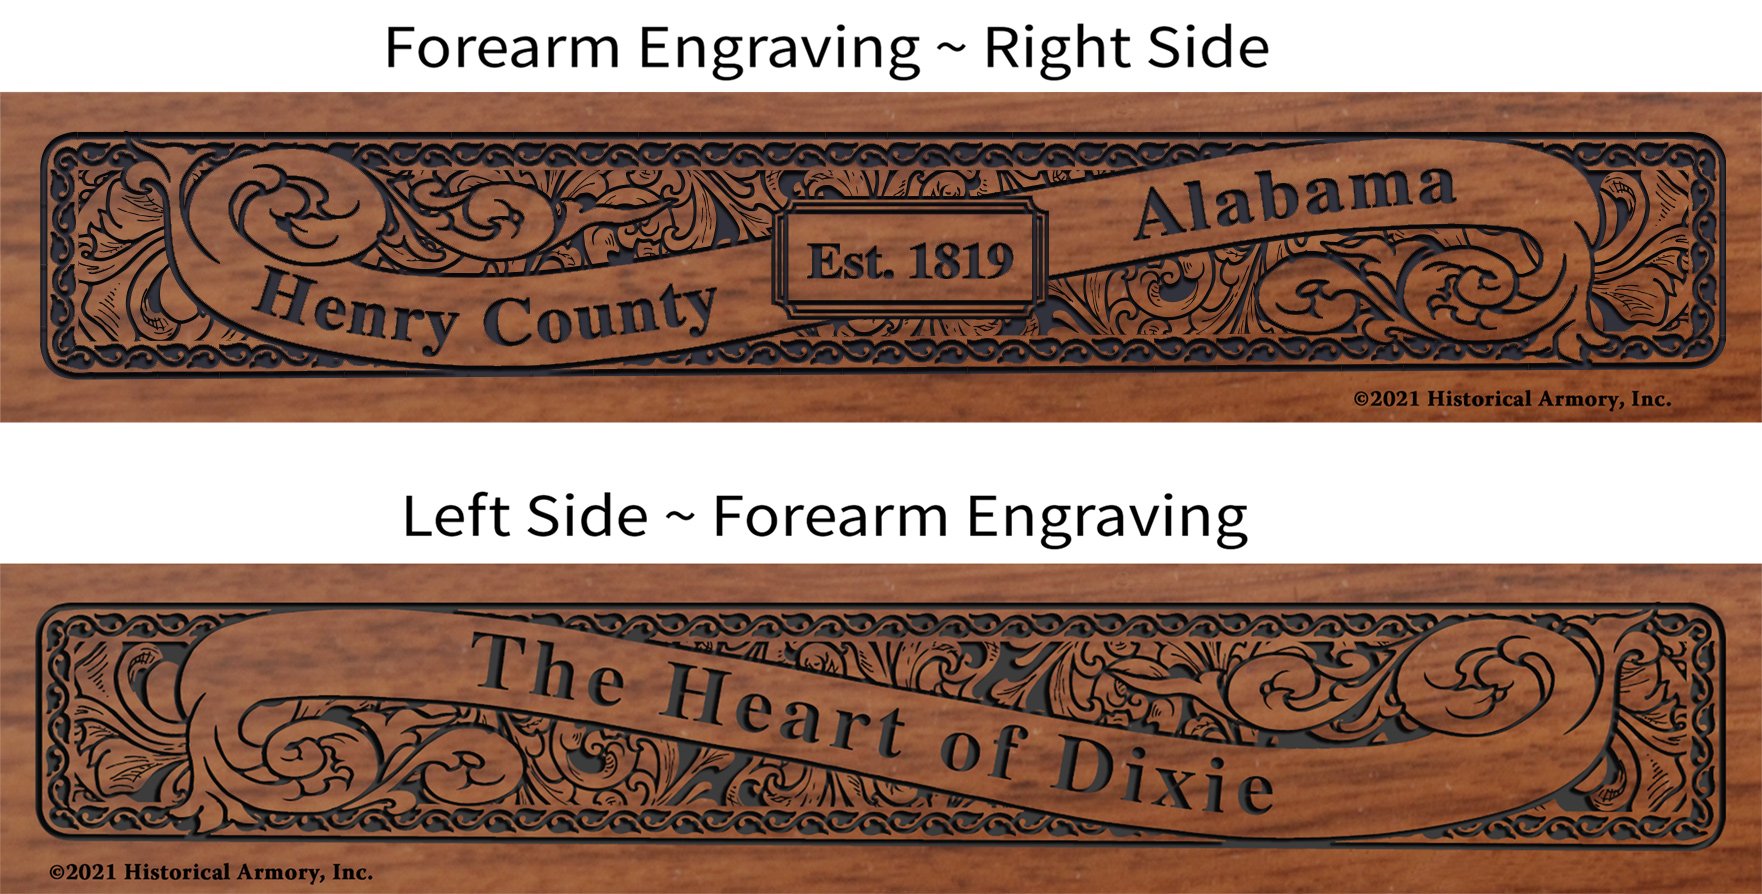 Henry County Alabama Establishment and Motto History Engraved Rifle Forearm